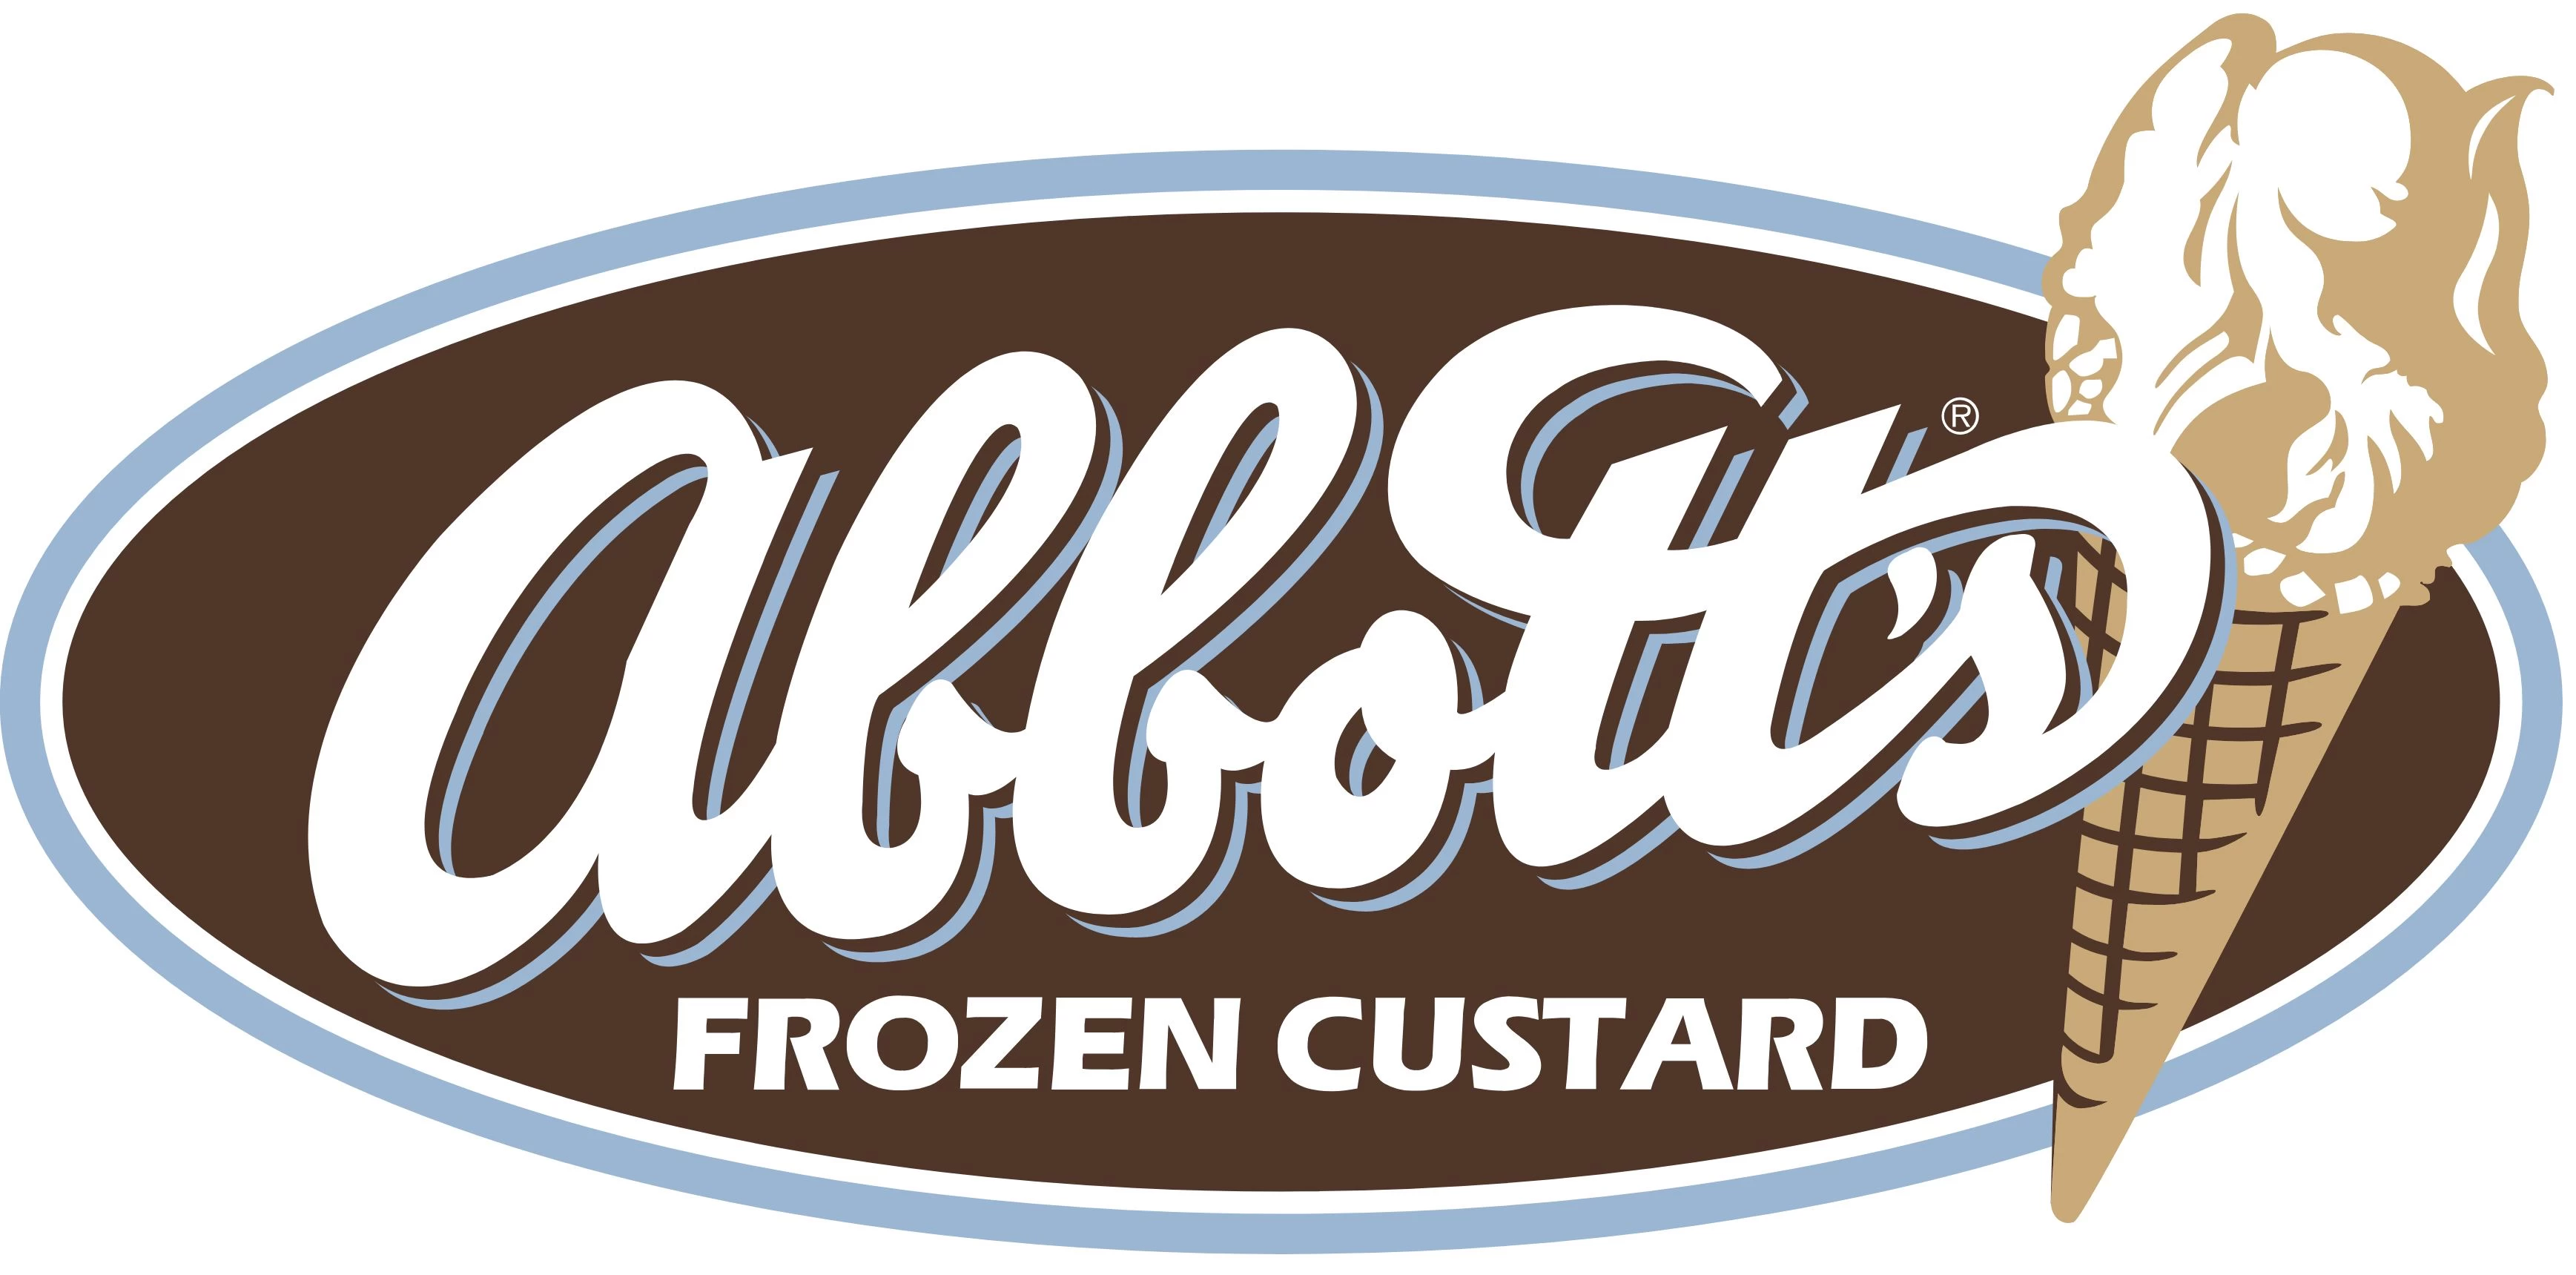 Abbott's Frozen Custard Franchise Information